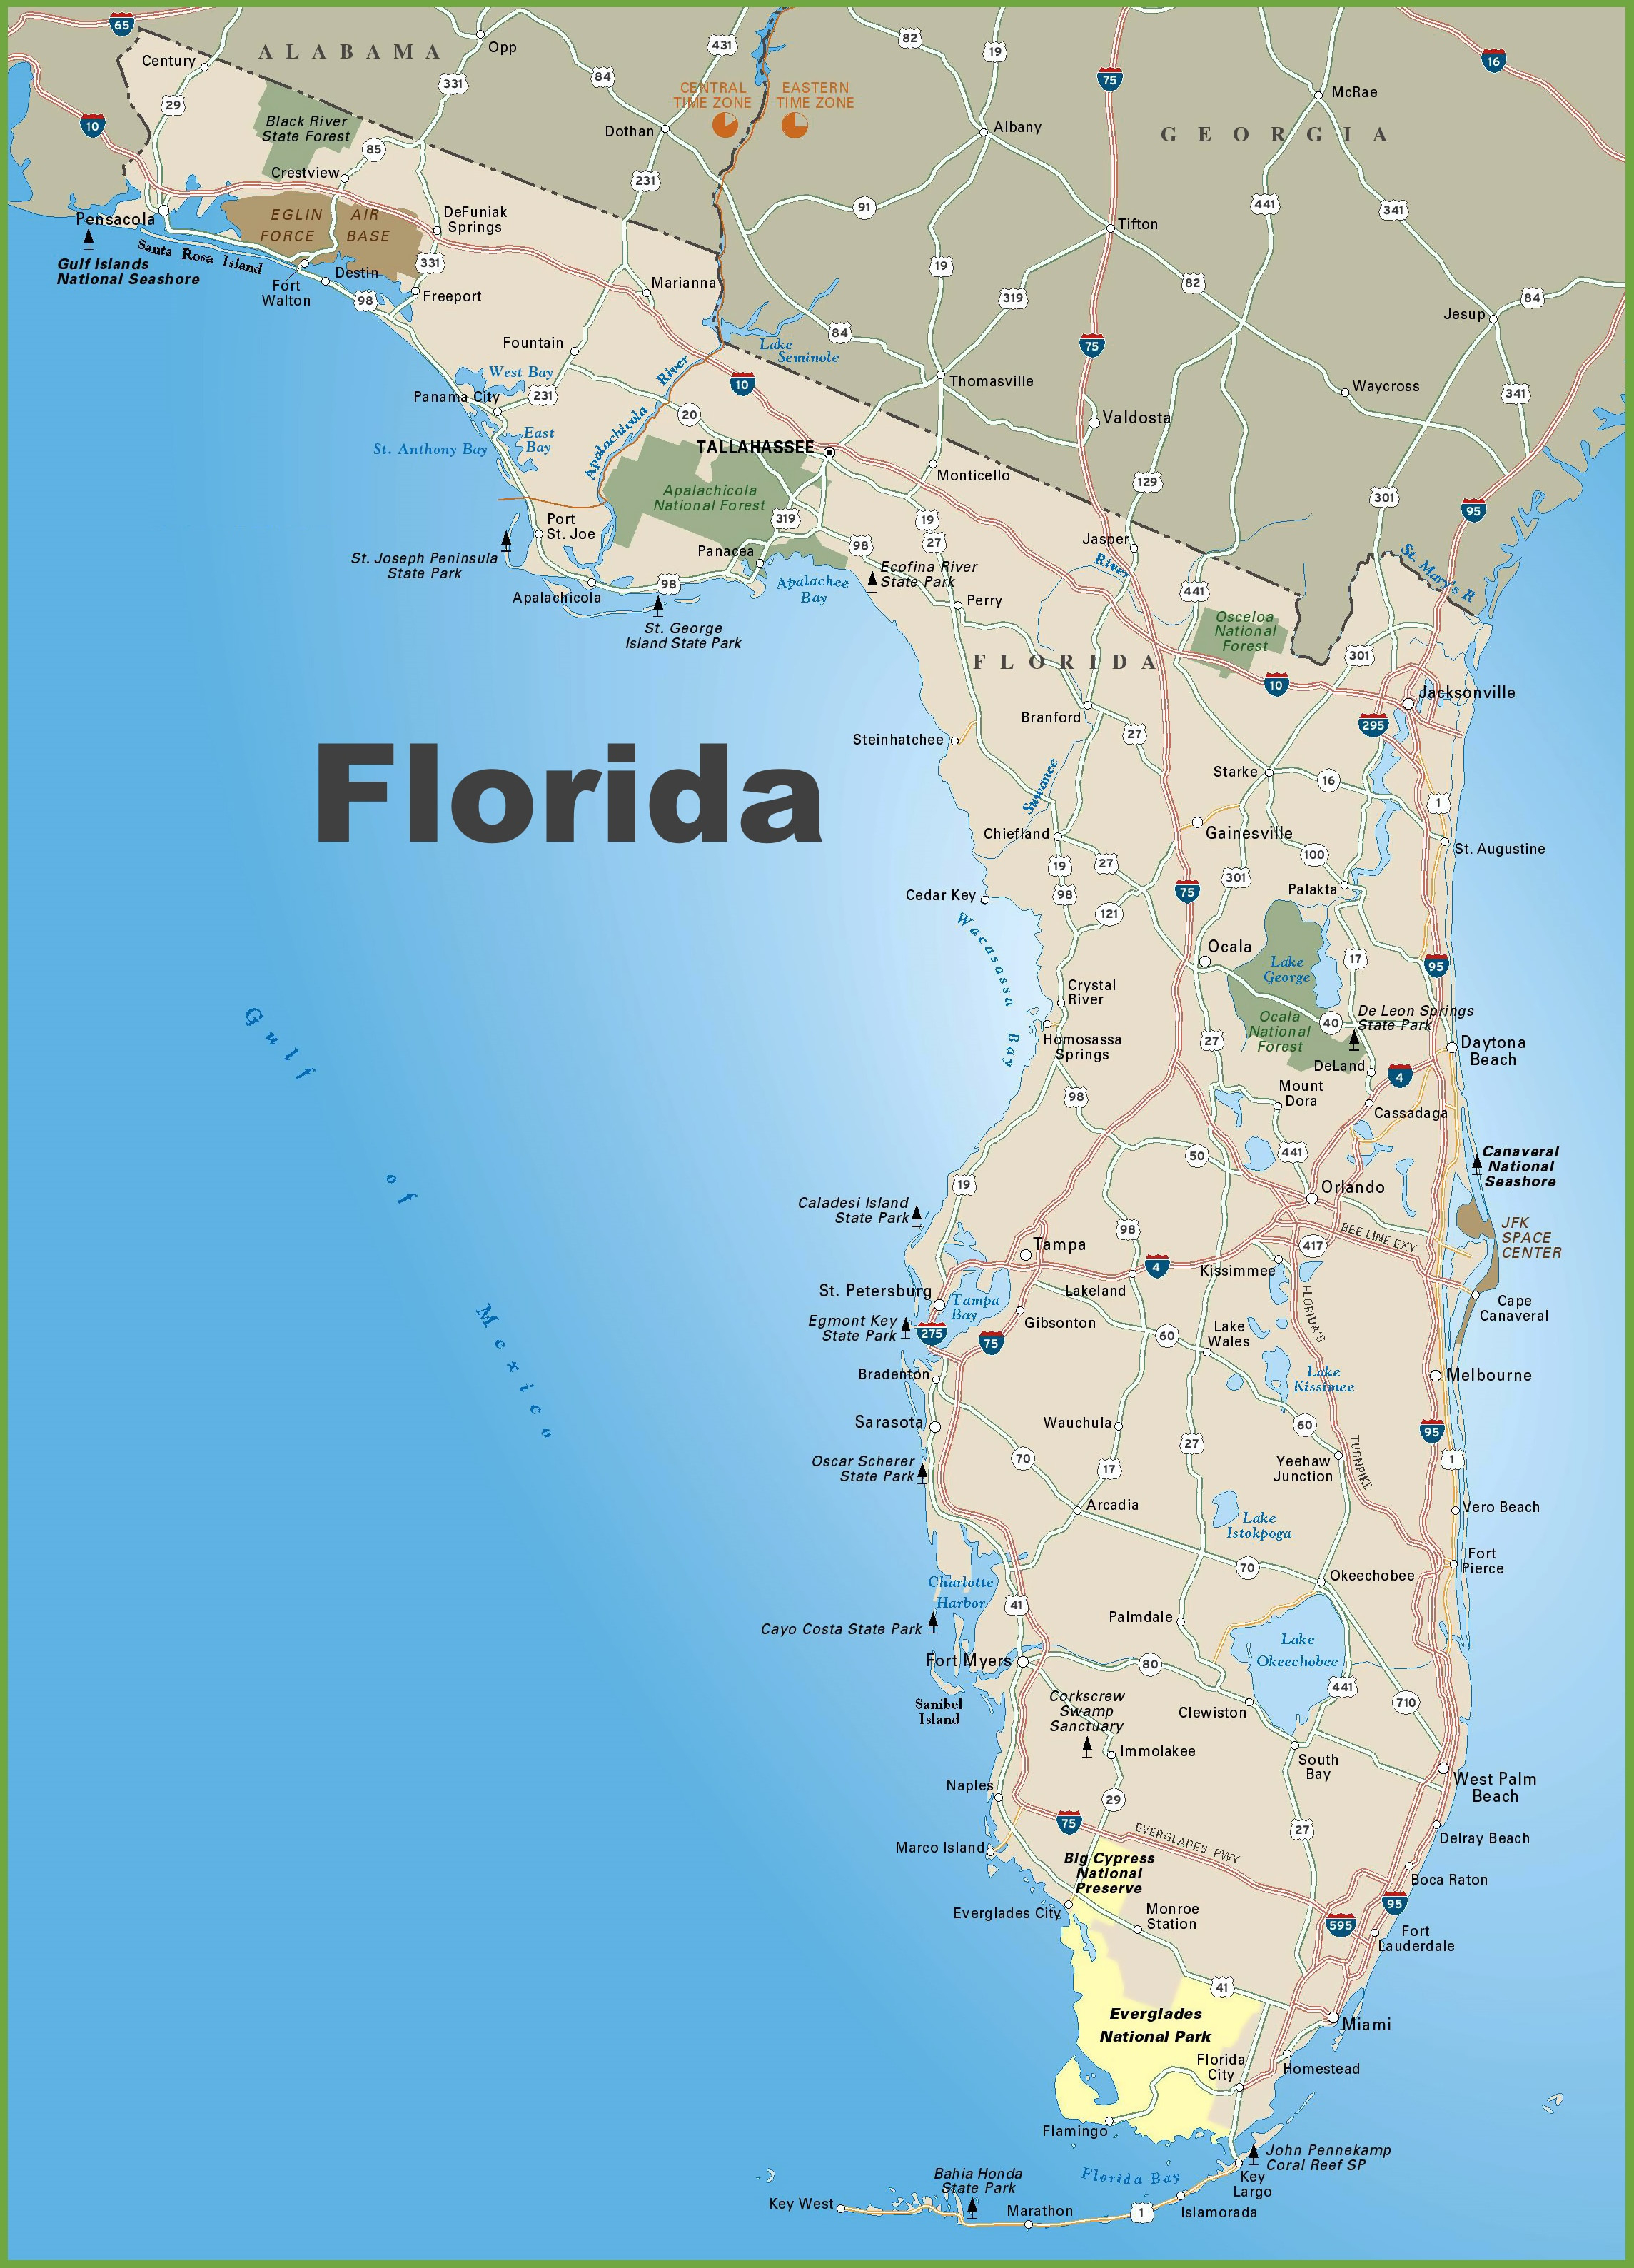 California Coastal Towns Map New Florida Maps With Cities And Towns - Map Of Florida Coastal Cities